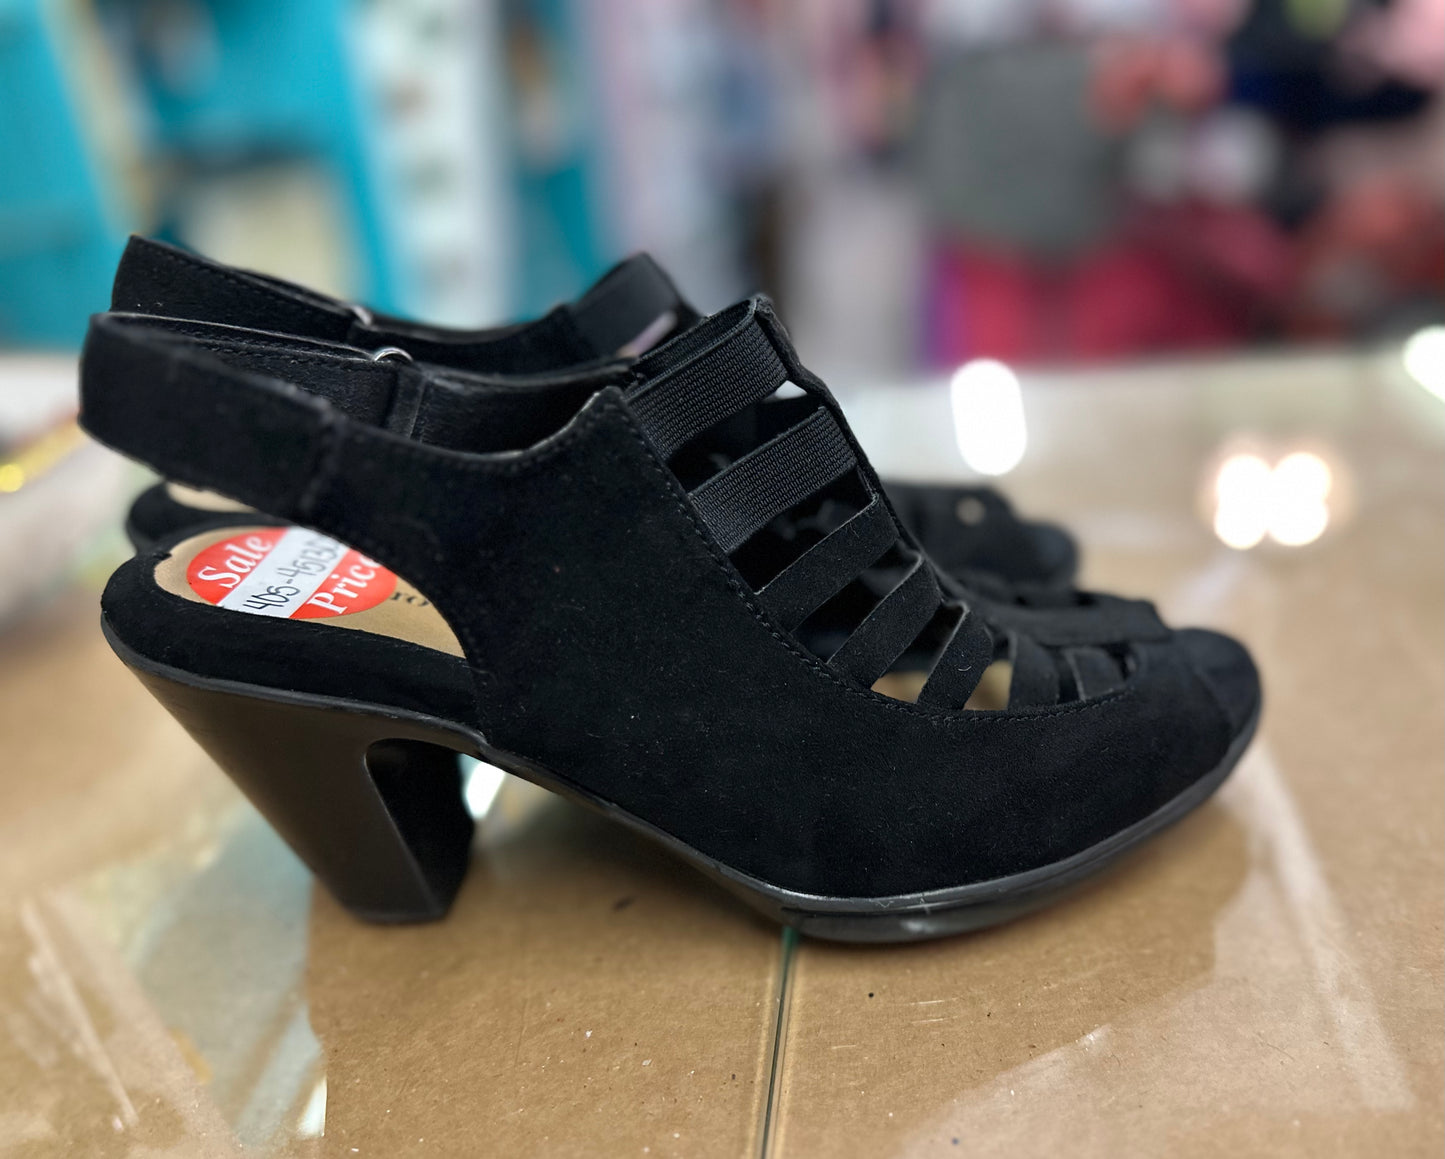 Croft & Barrow Shay Ortholite eco black high  Heels Shoes women's size 7.5 ~EUC